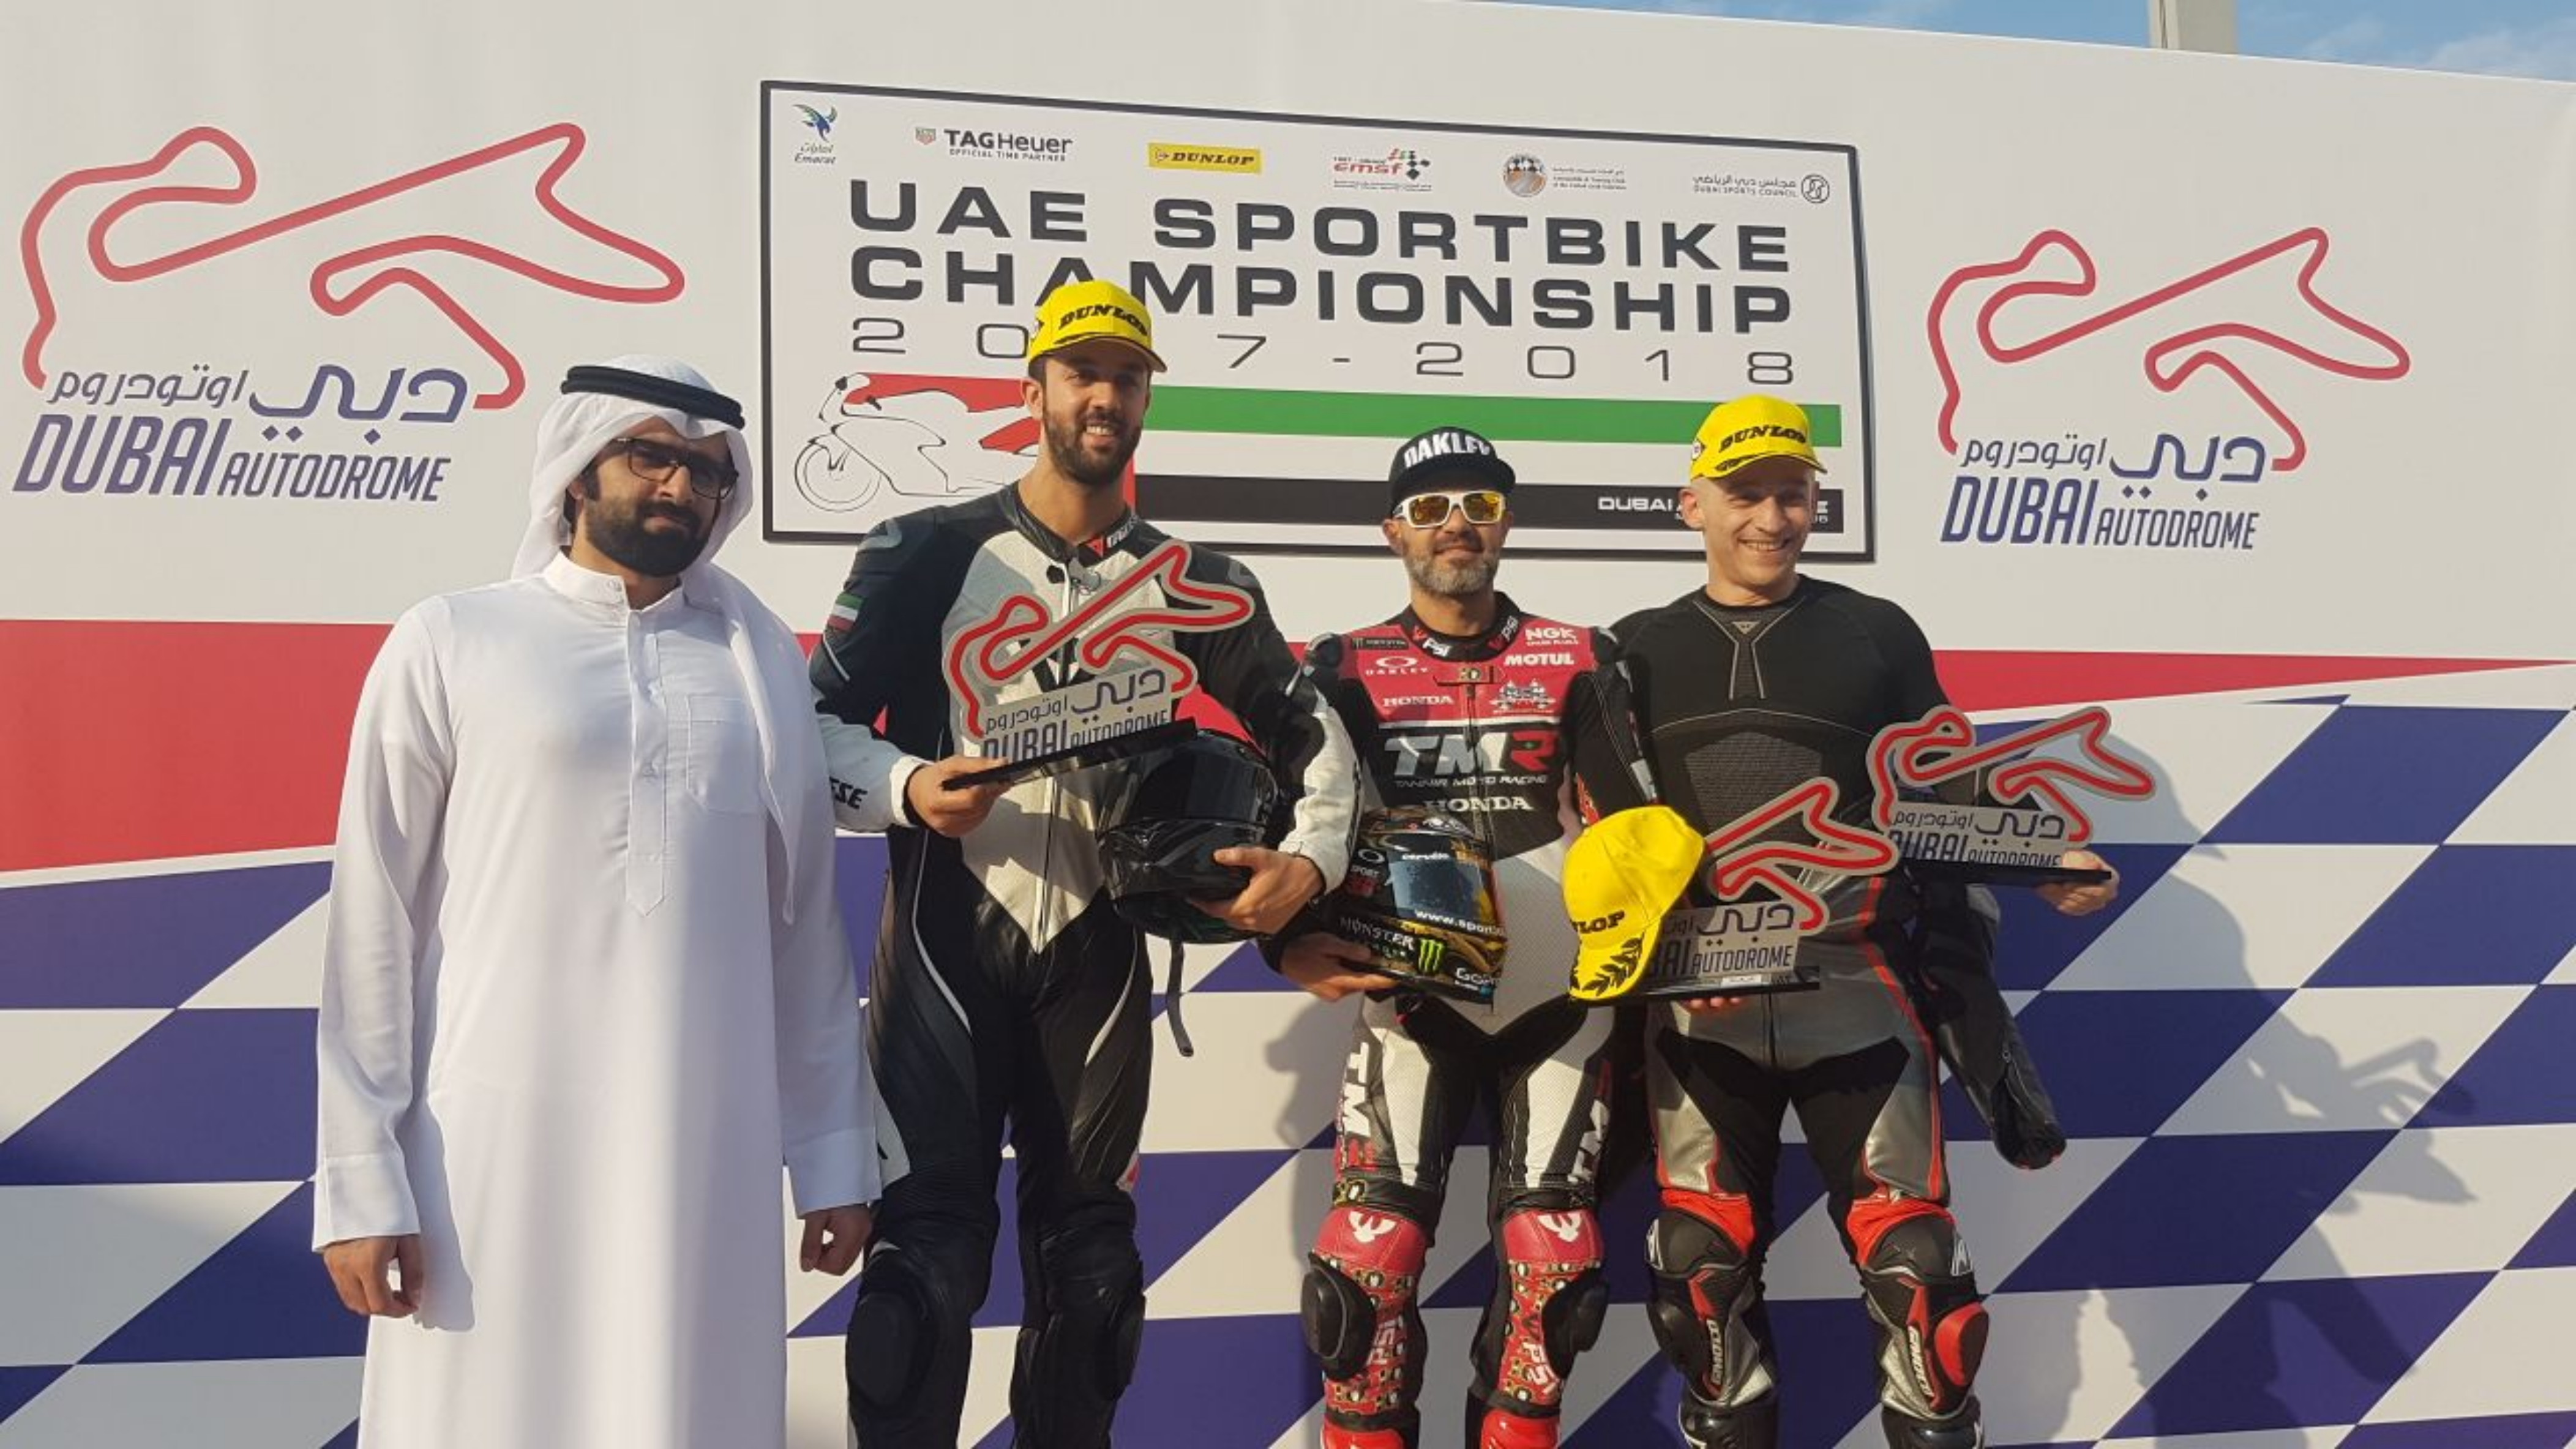 Kuwait's Fahad Al-Gharabally finishes 2nd in UAE's Superbike race